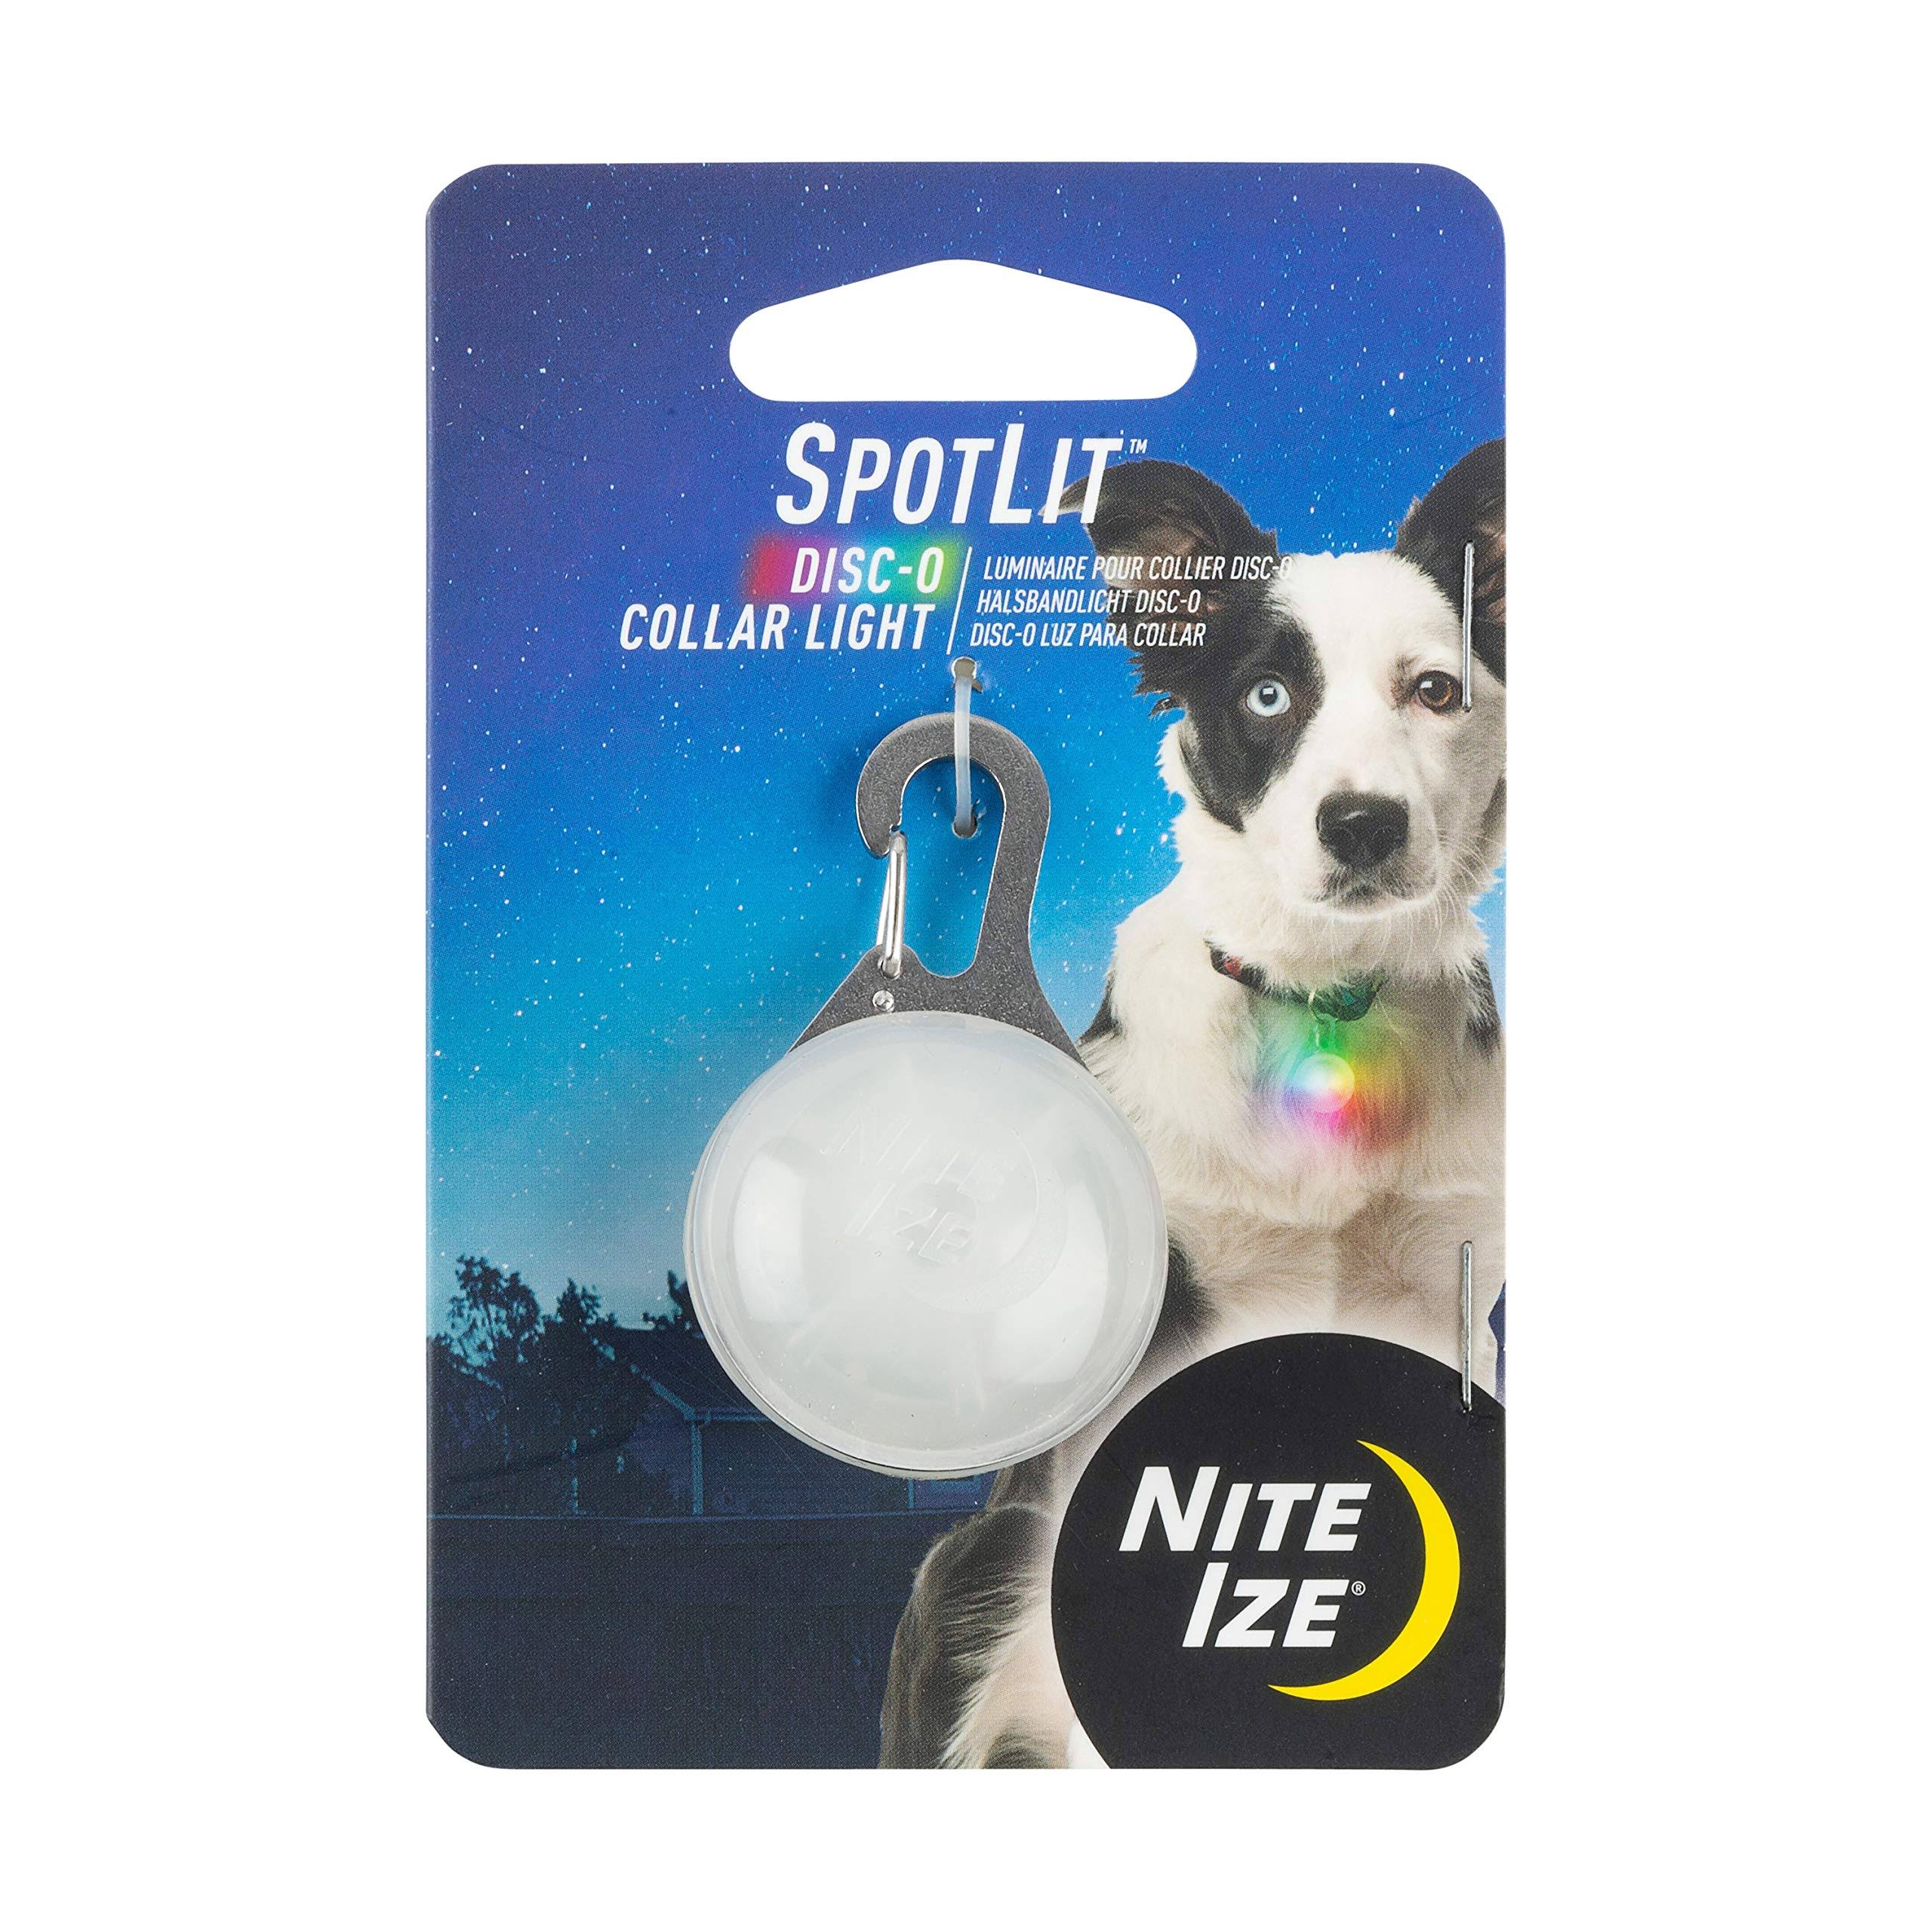 Nite Ize SpotLit Flash or Glow Multicolour LED Dog Collar Light